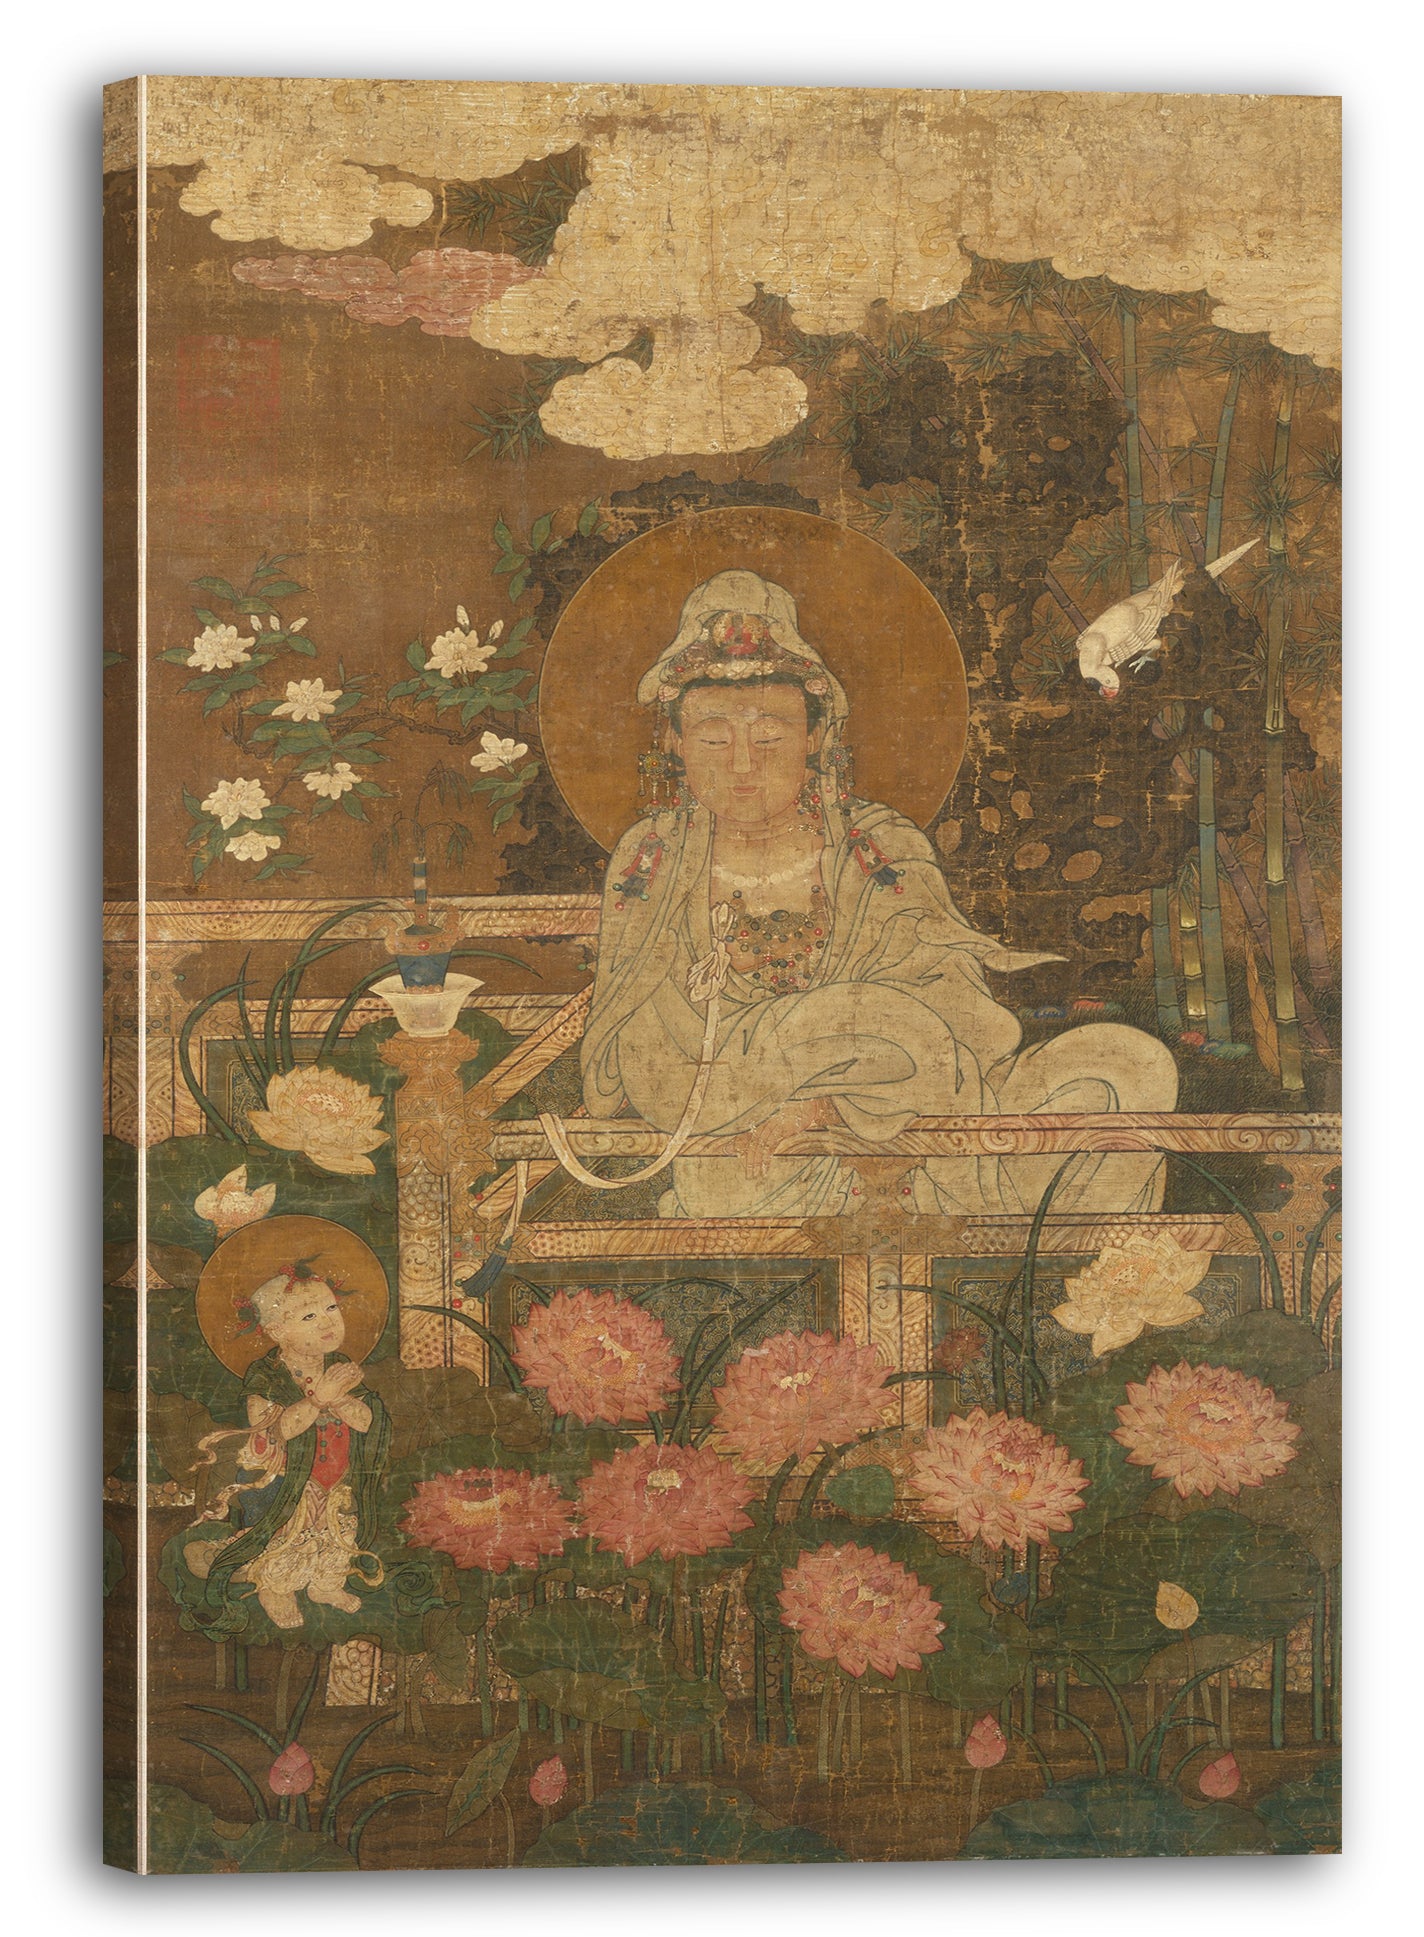 Leinwandbild Nicht identifizierter Künstler Chinese, spätes 16. Jahrhundert - Guanyin als Neun-Lotus-Bodhisattva